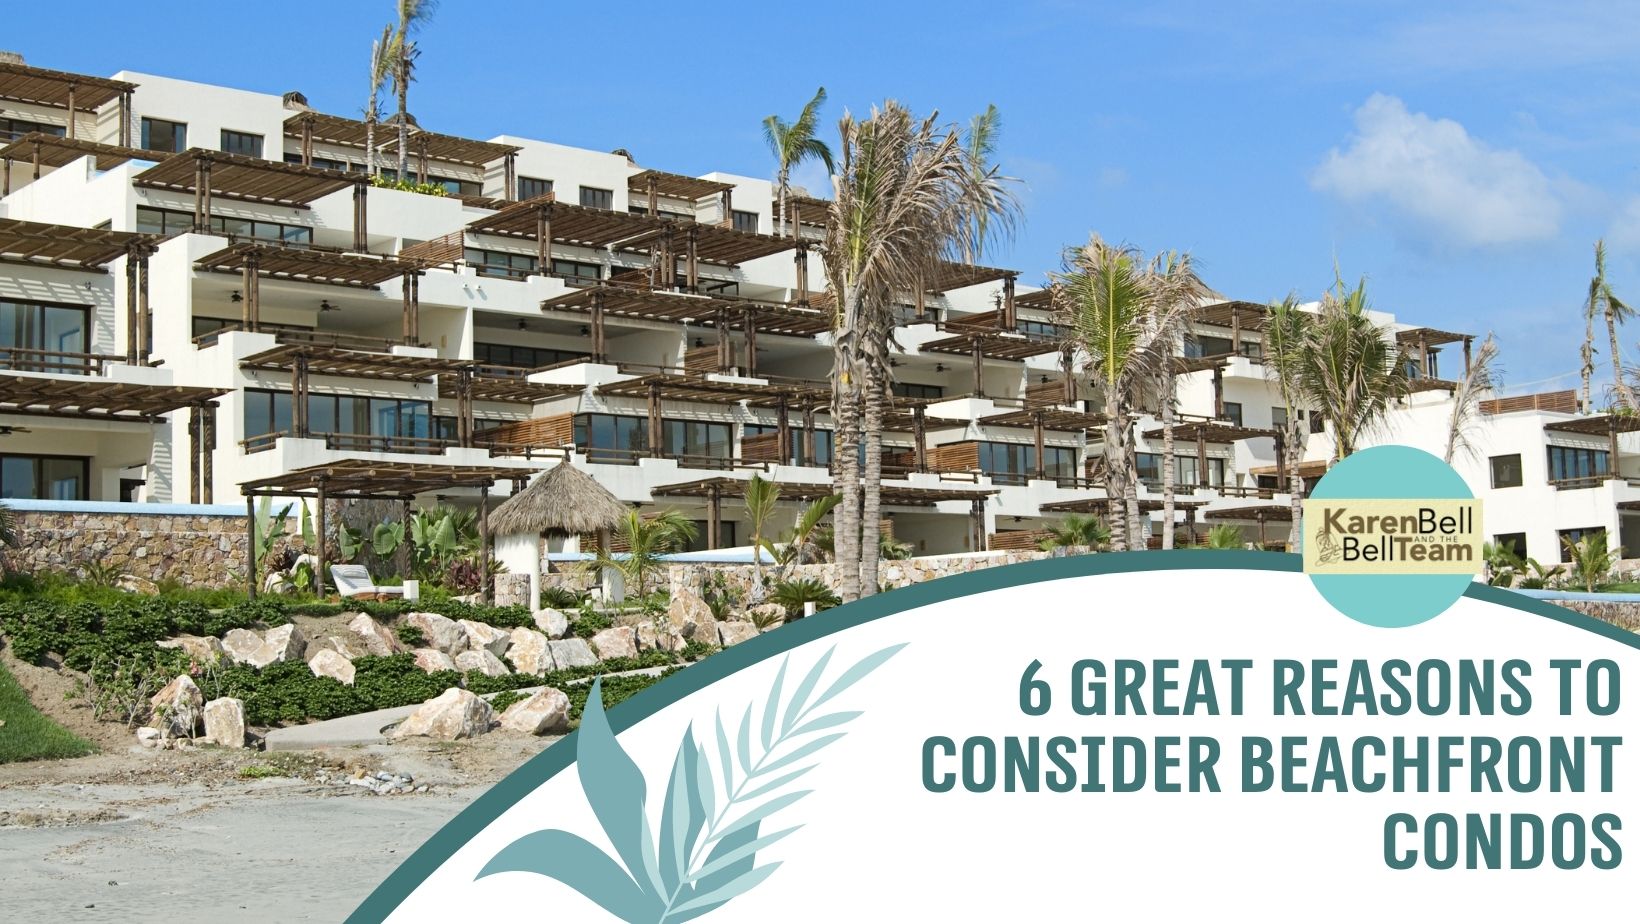 6 Great Reasons to Consider Beachfront Condos